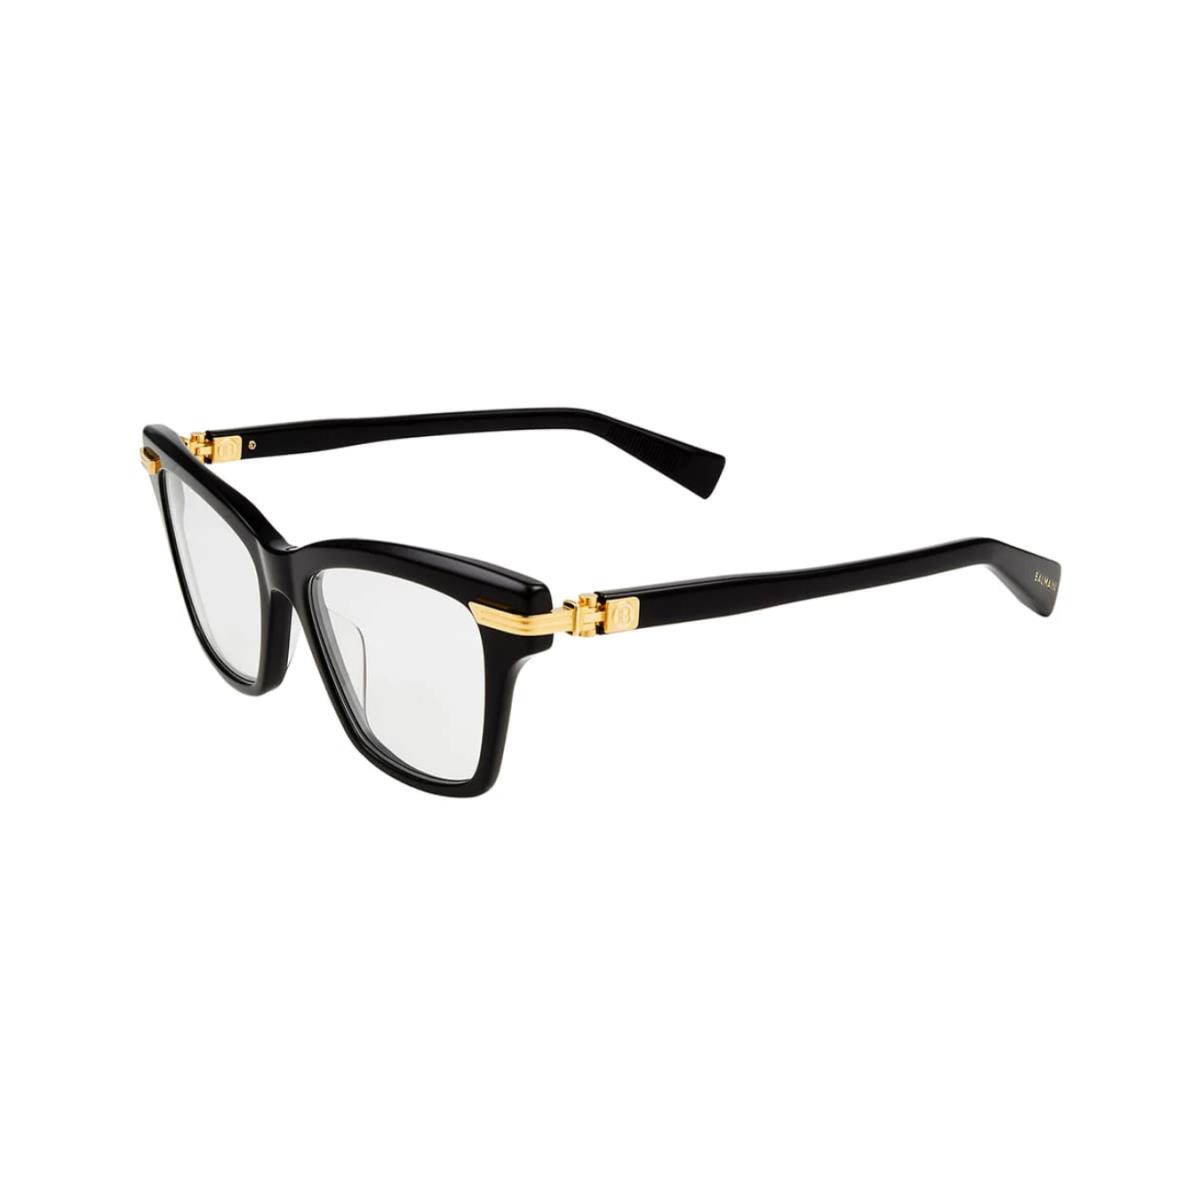 Balmain Eyeglasses Sentinelle Iii Black Gold Frames 52MM Rx-able